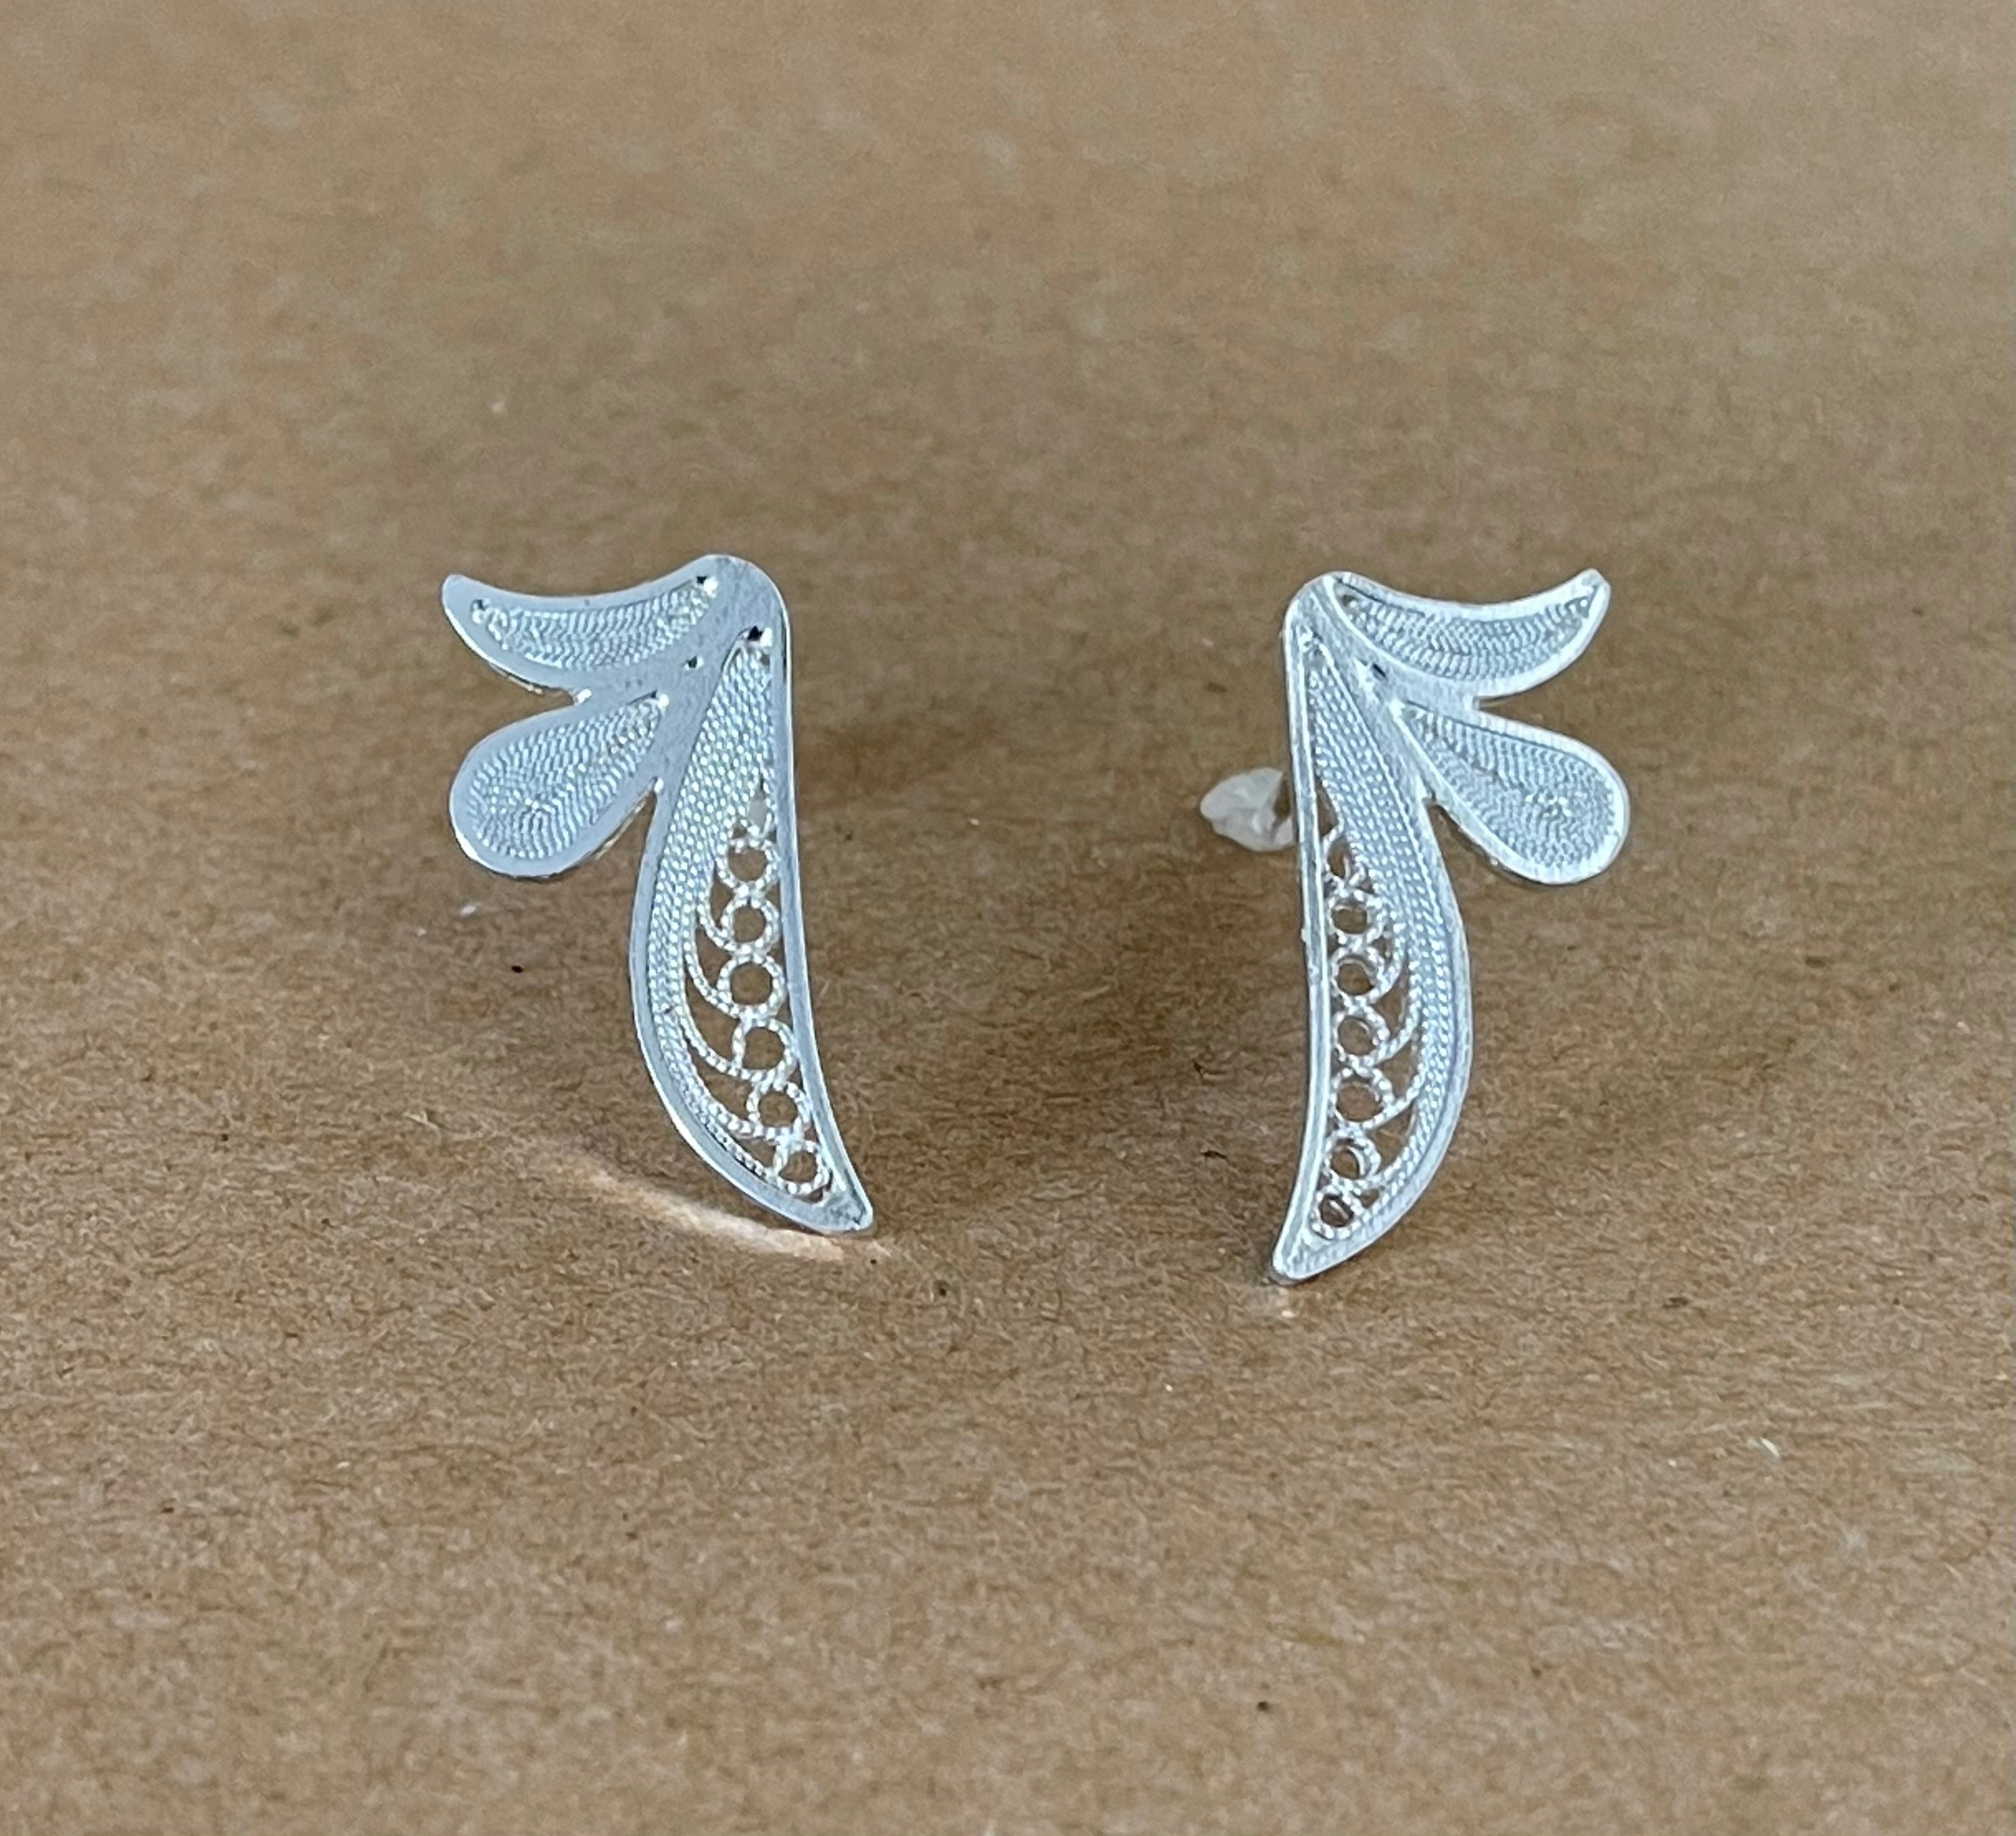 Wing earrings filigree sterling silver ley 925